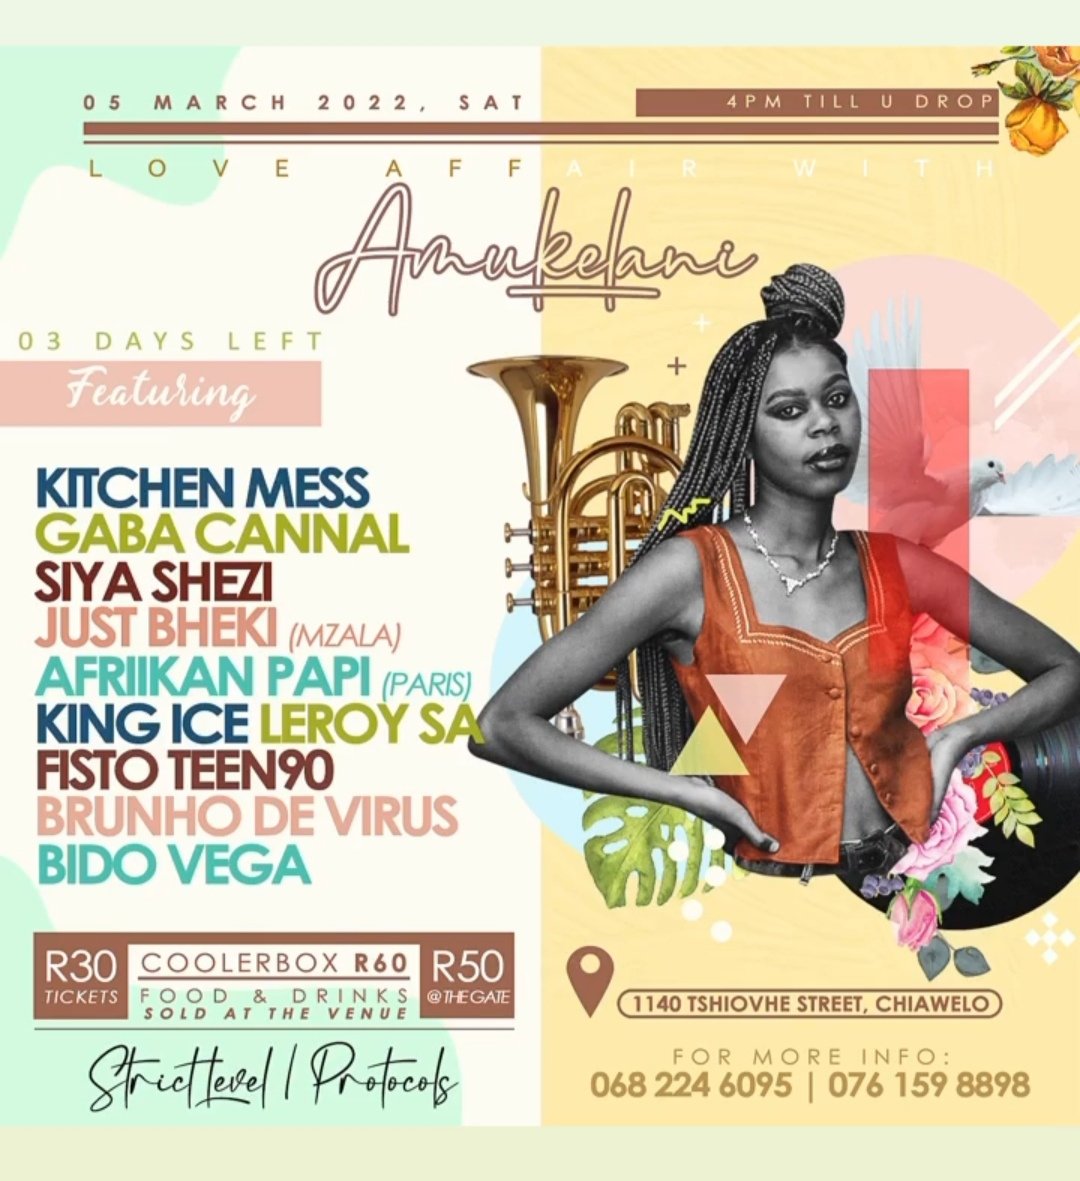 Love Affair With Amukelani.
Date: 05 March / Tomorrow
Get your tickets, Come through. 

Live Stream here youtu.be/xqndfPNi1Tw

Set the reminder on YouTube 
#LoveAffairWithAmukelani #KLO #Amukelani #Siyashezi #GabaCannal #JustBheki #AfrikanPapi #KitchenMess #BBMzansi